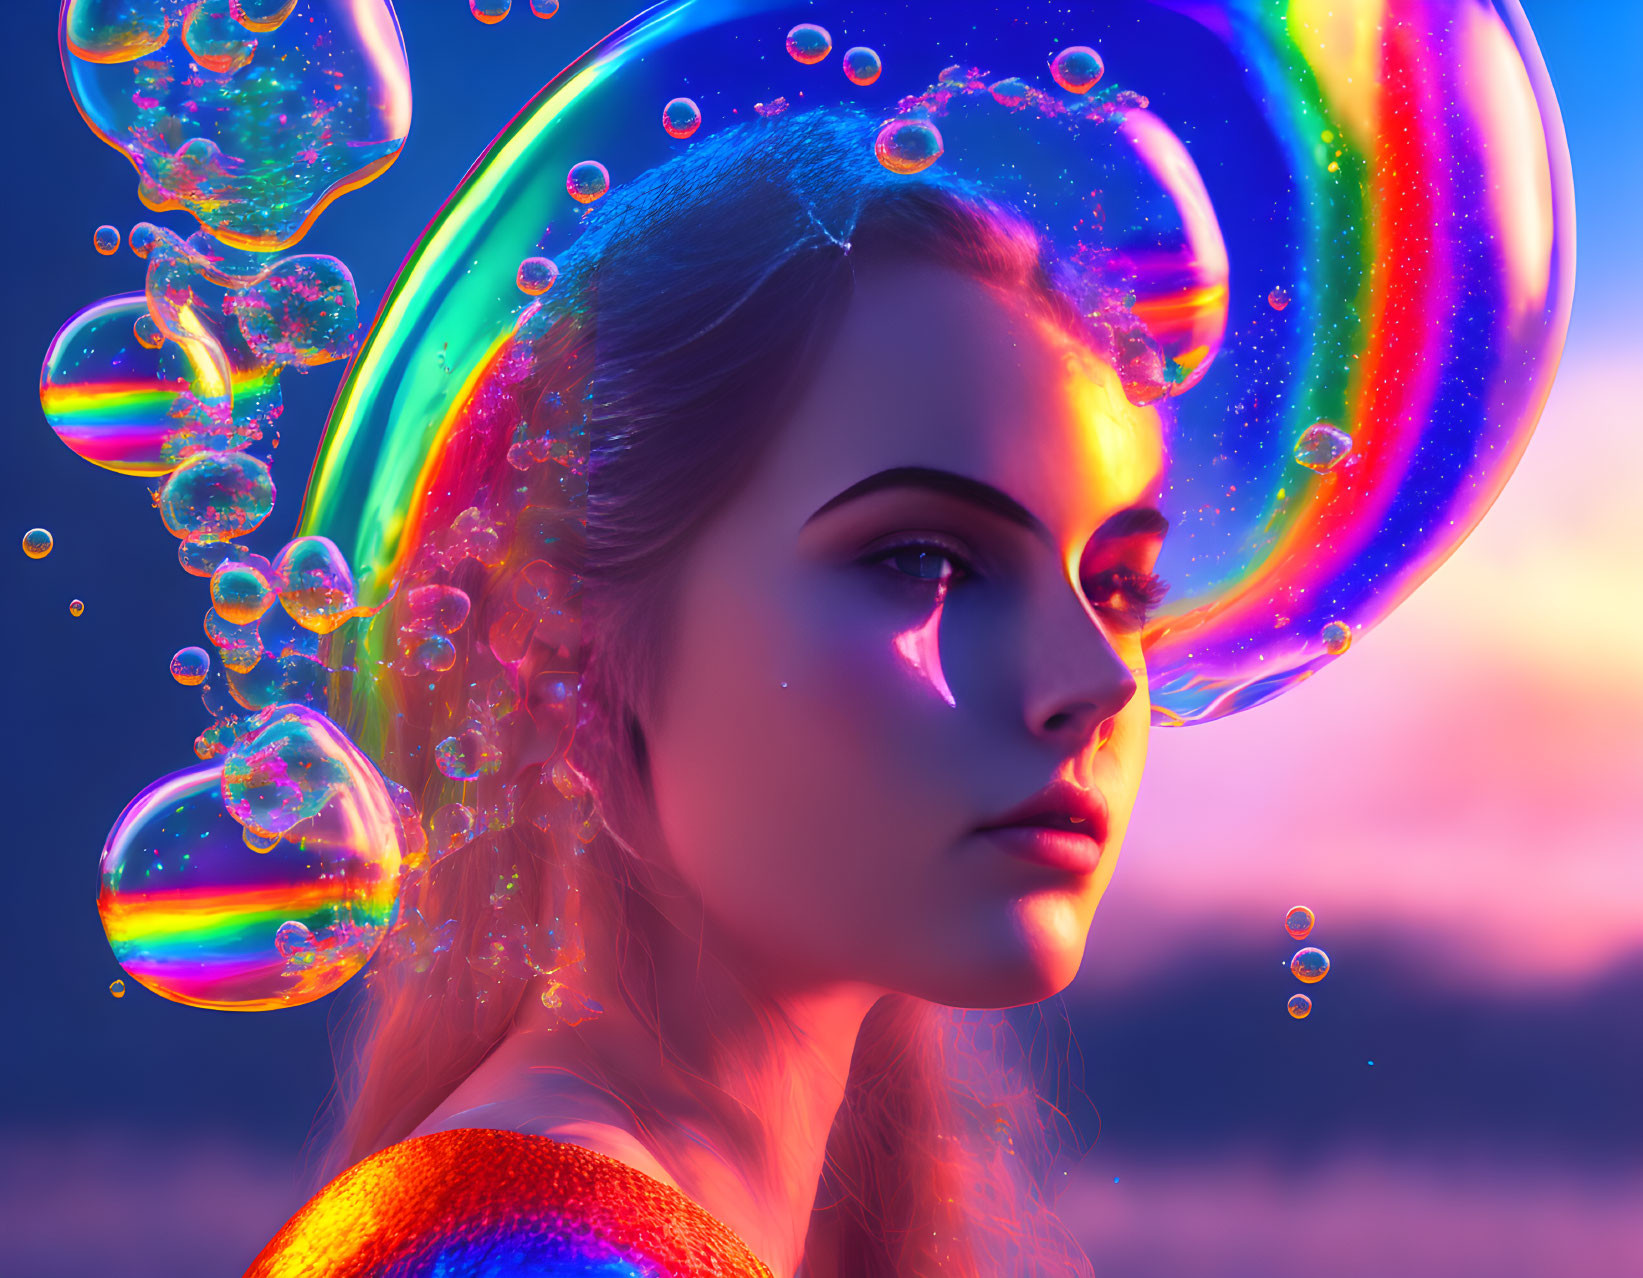 Fantasy Beauty: Hyperrealistic 4K Digital Art